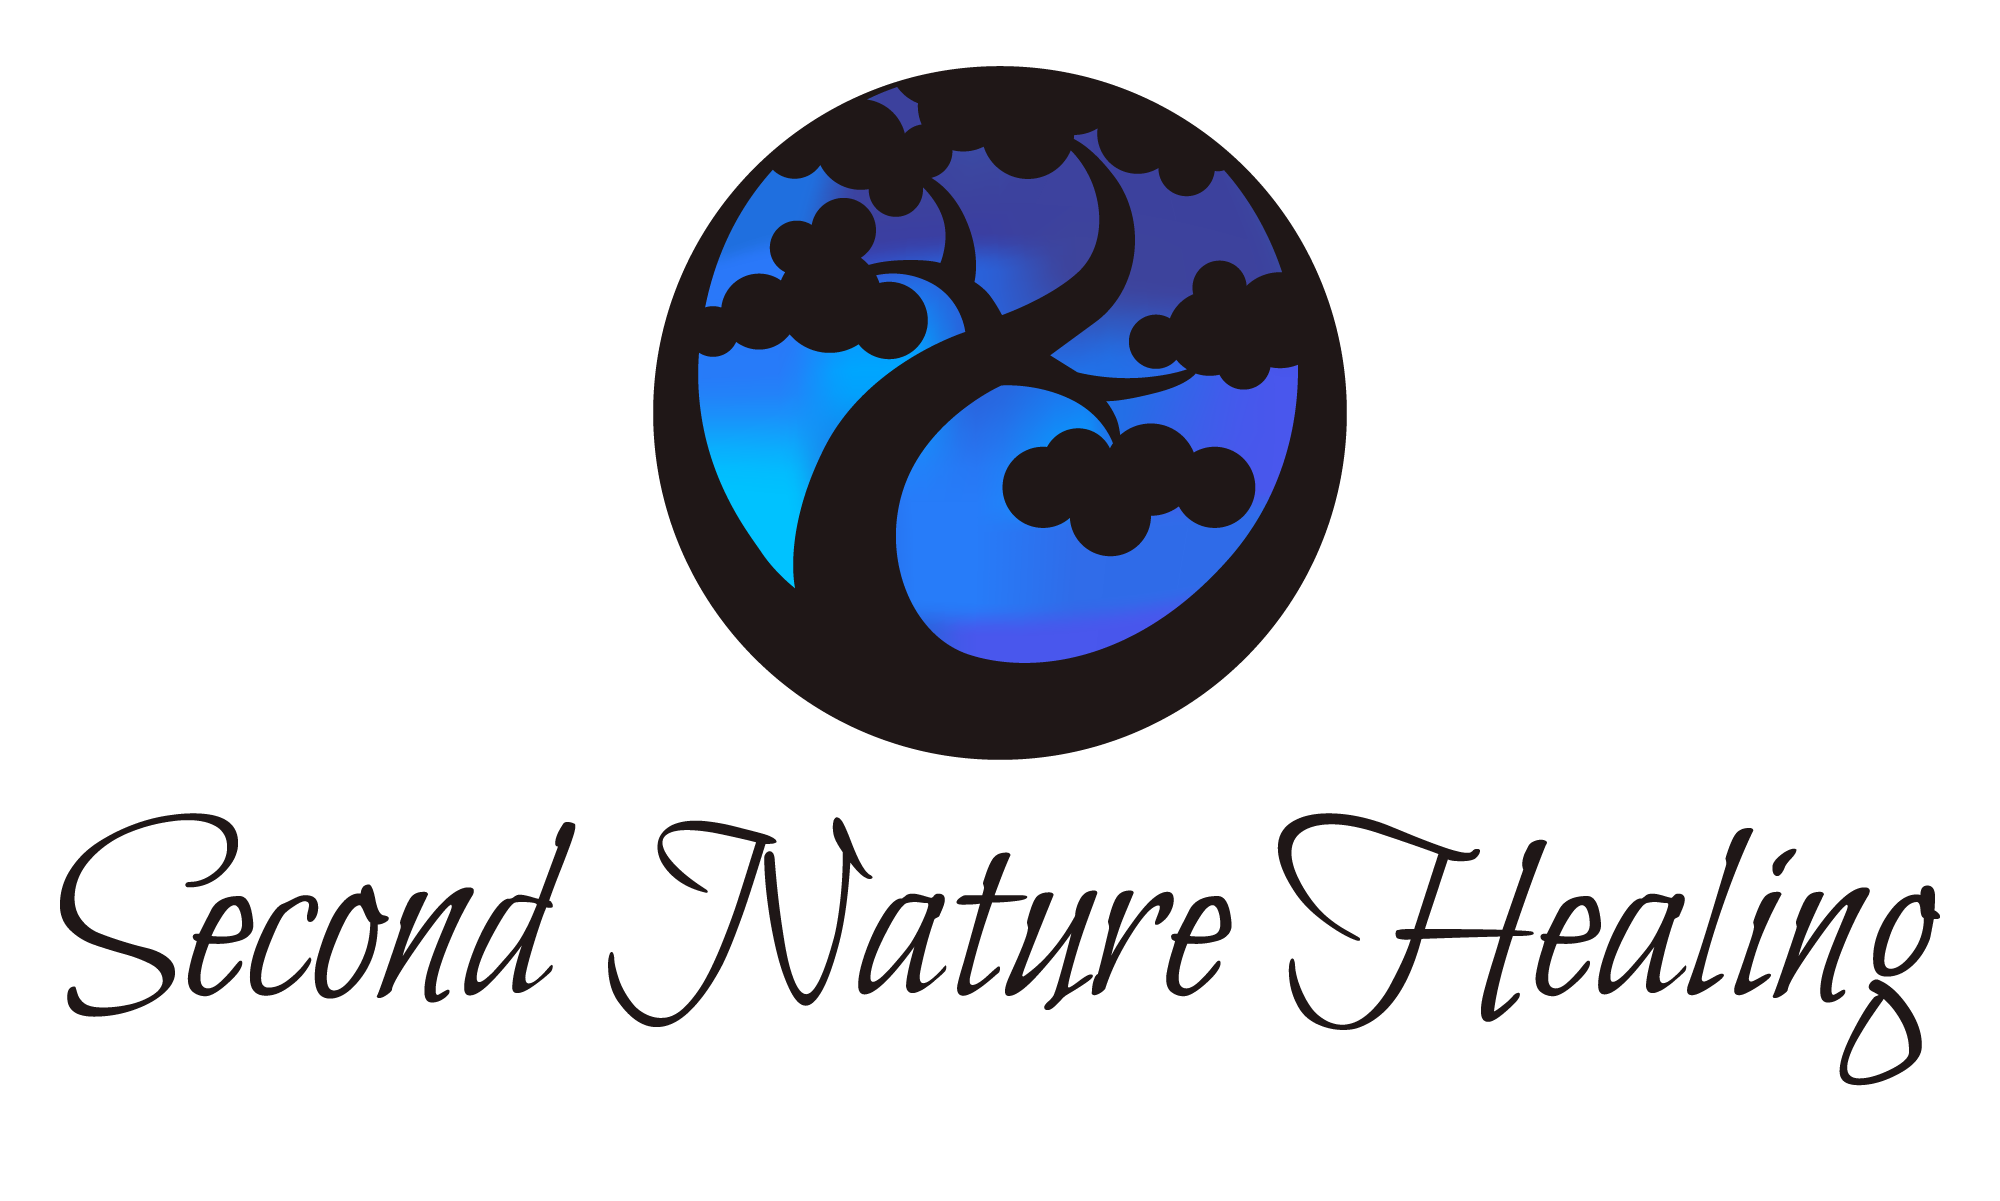 Second Nature Healing